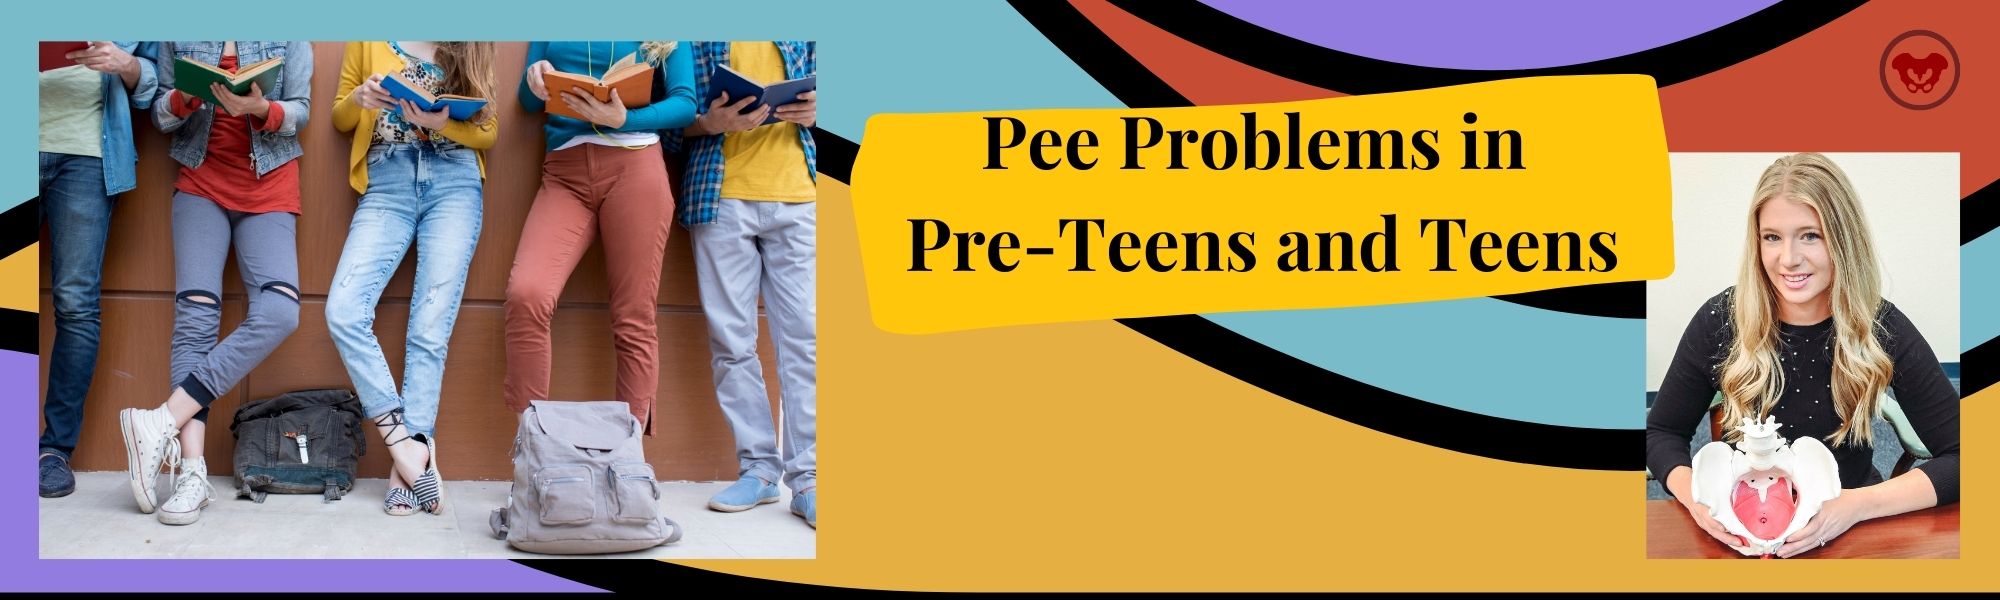 Pee Problems in Pre-Teens and Teens